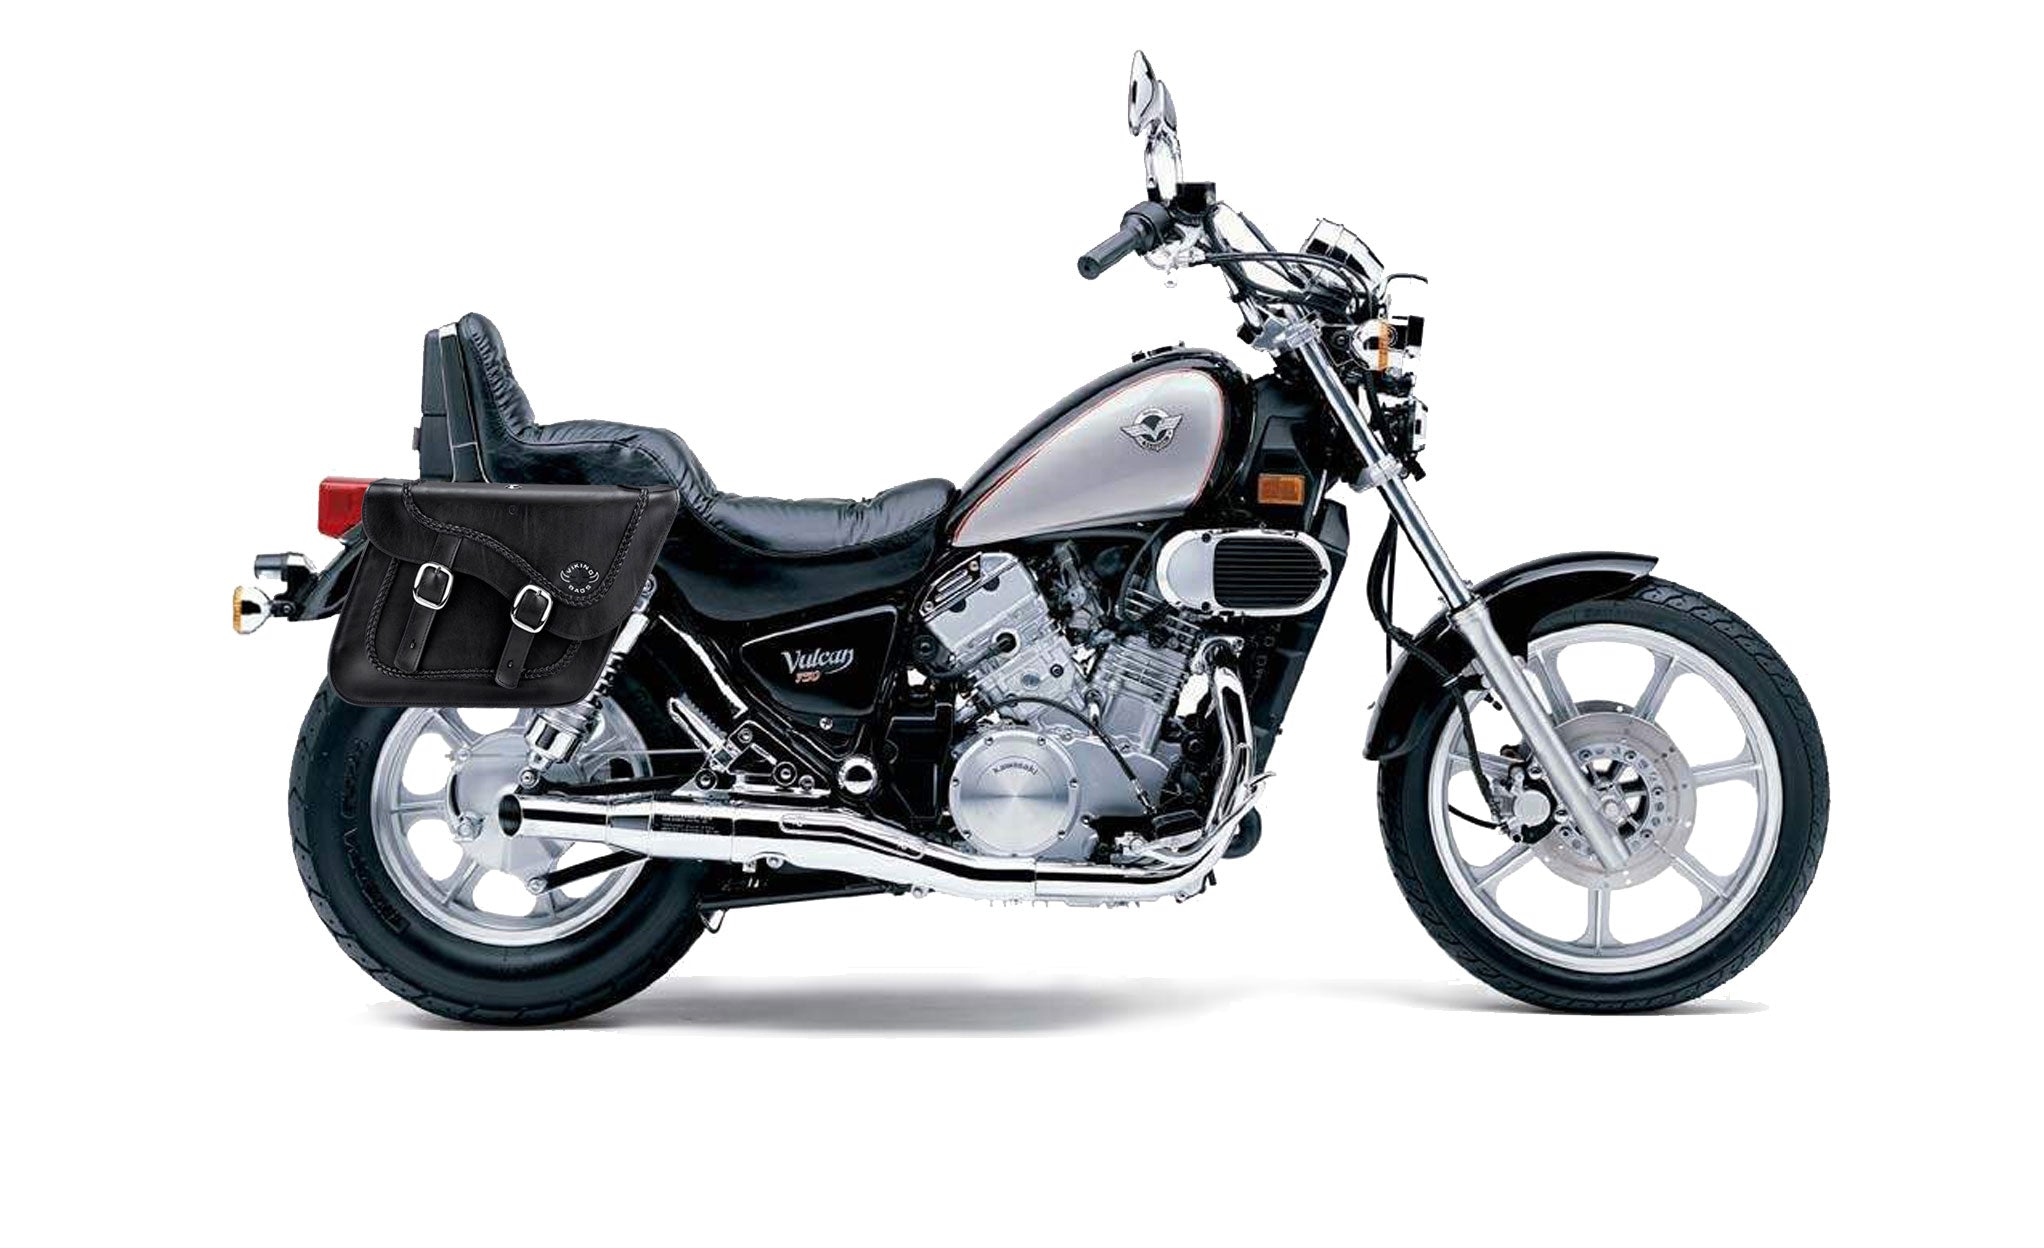 Viking Americano Kawasaki Vulcan 750 Vn750 Braided Large Leather Motorcycle Saddlebags on Bike Photo @expand